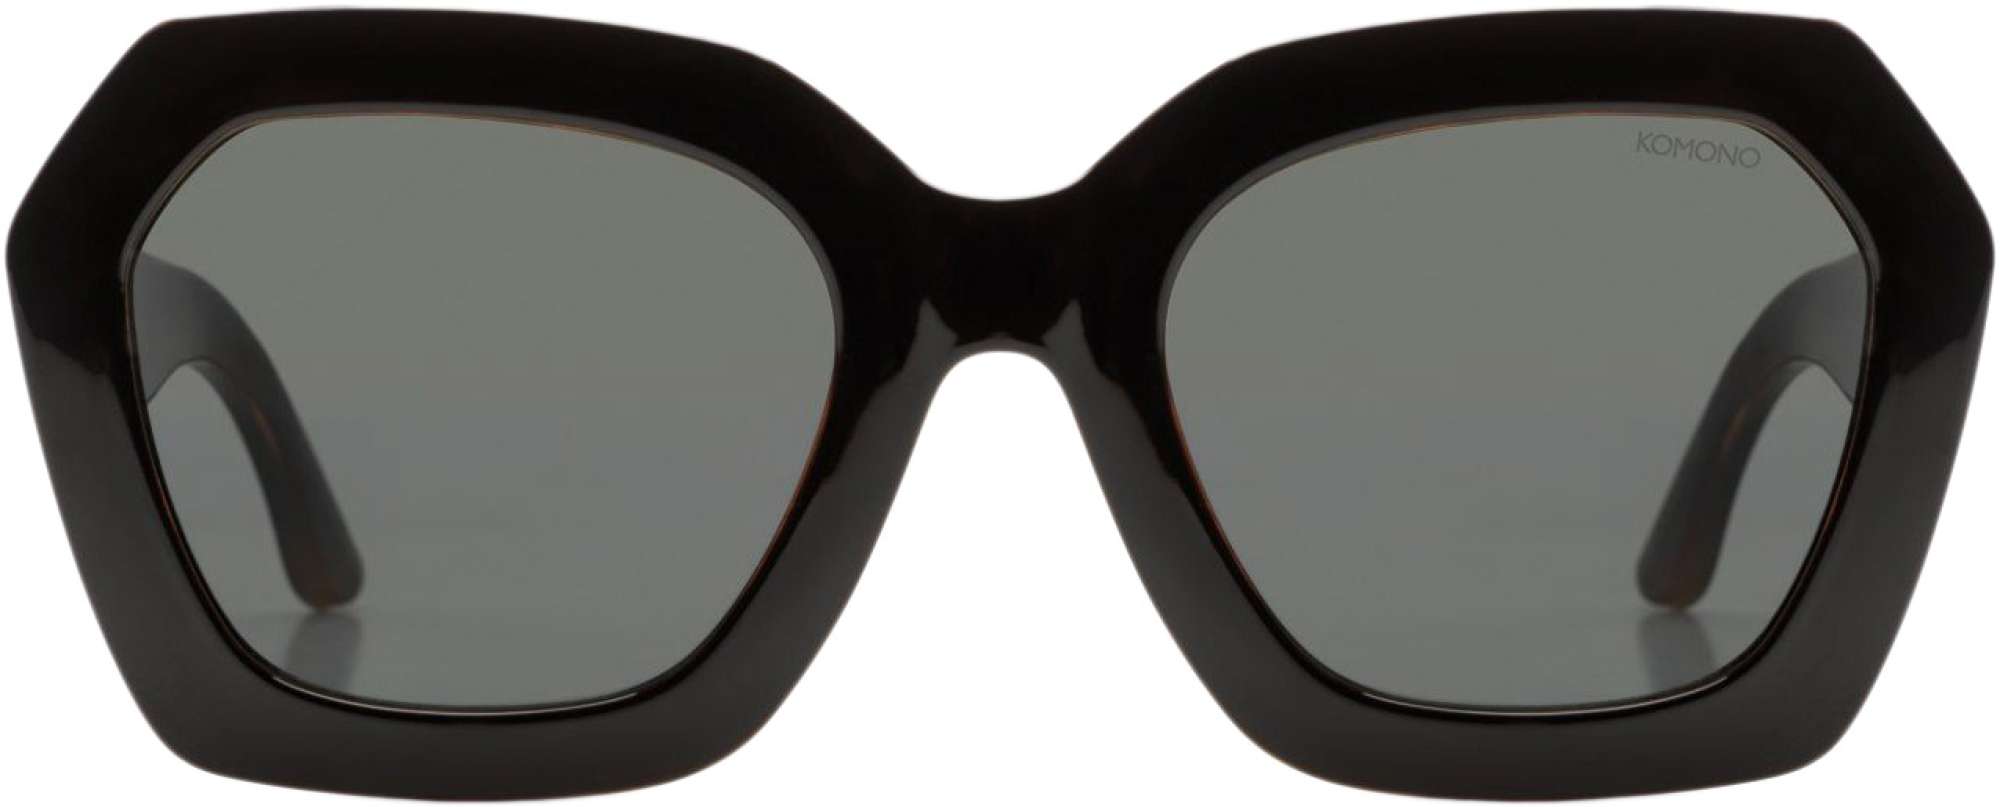 Afbeelding van Komono Gwen black tortoise sunglasses